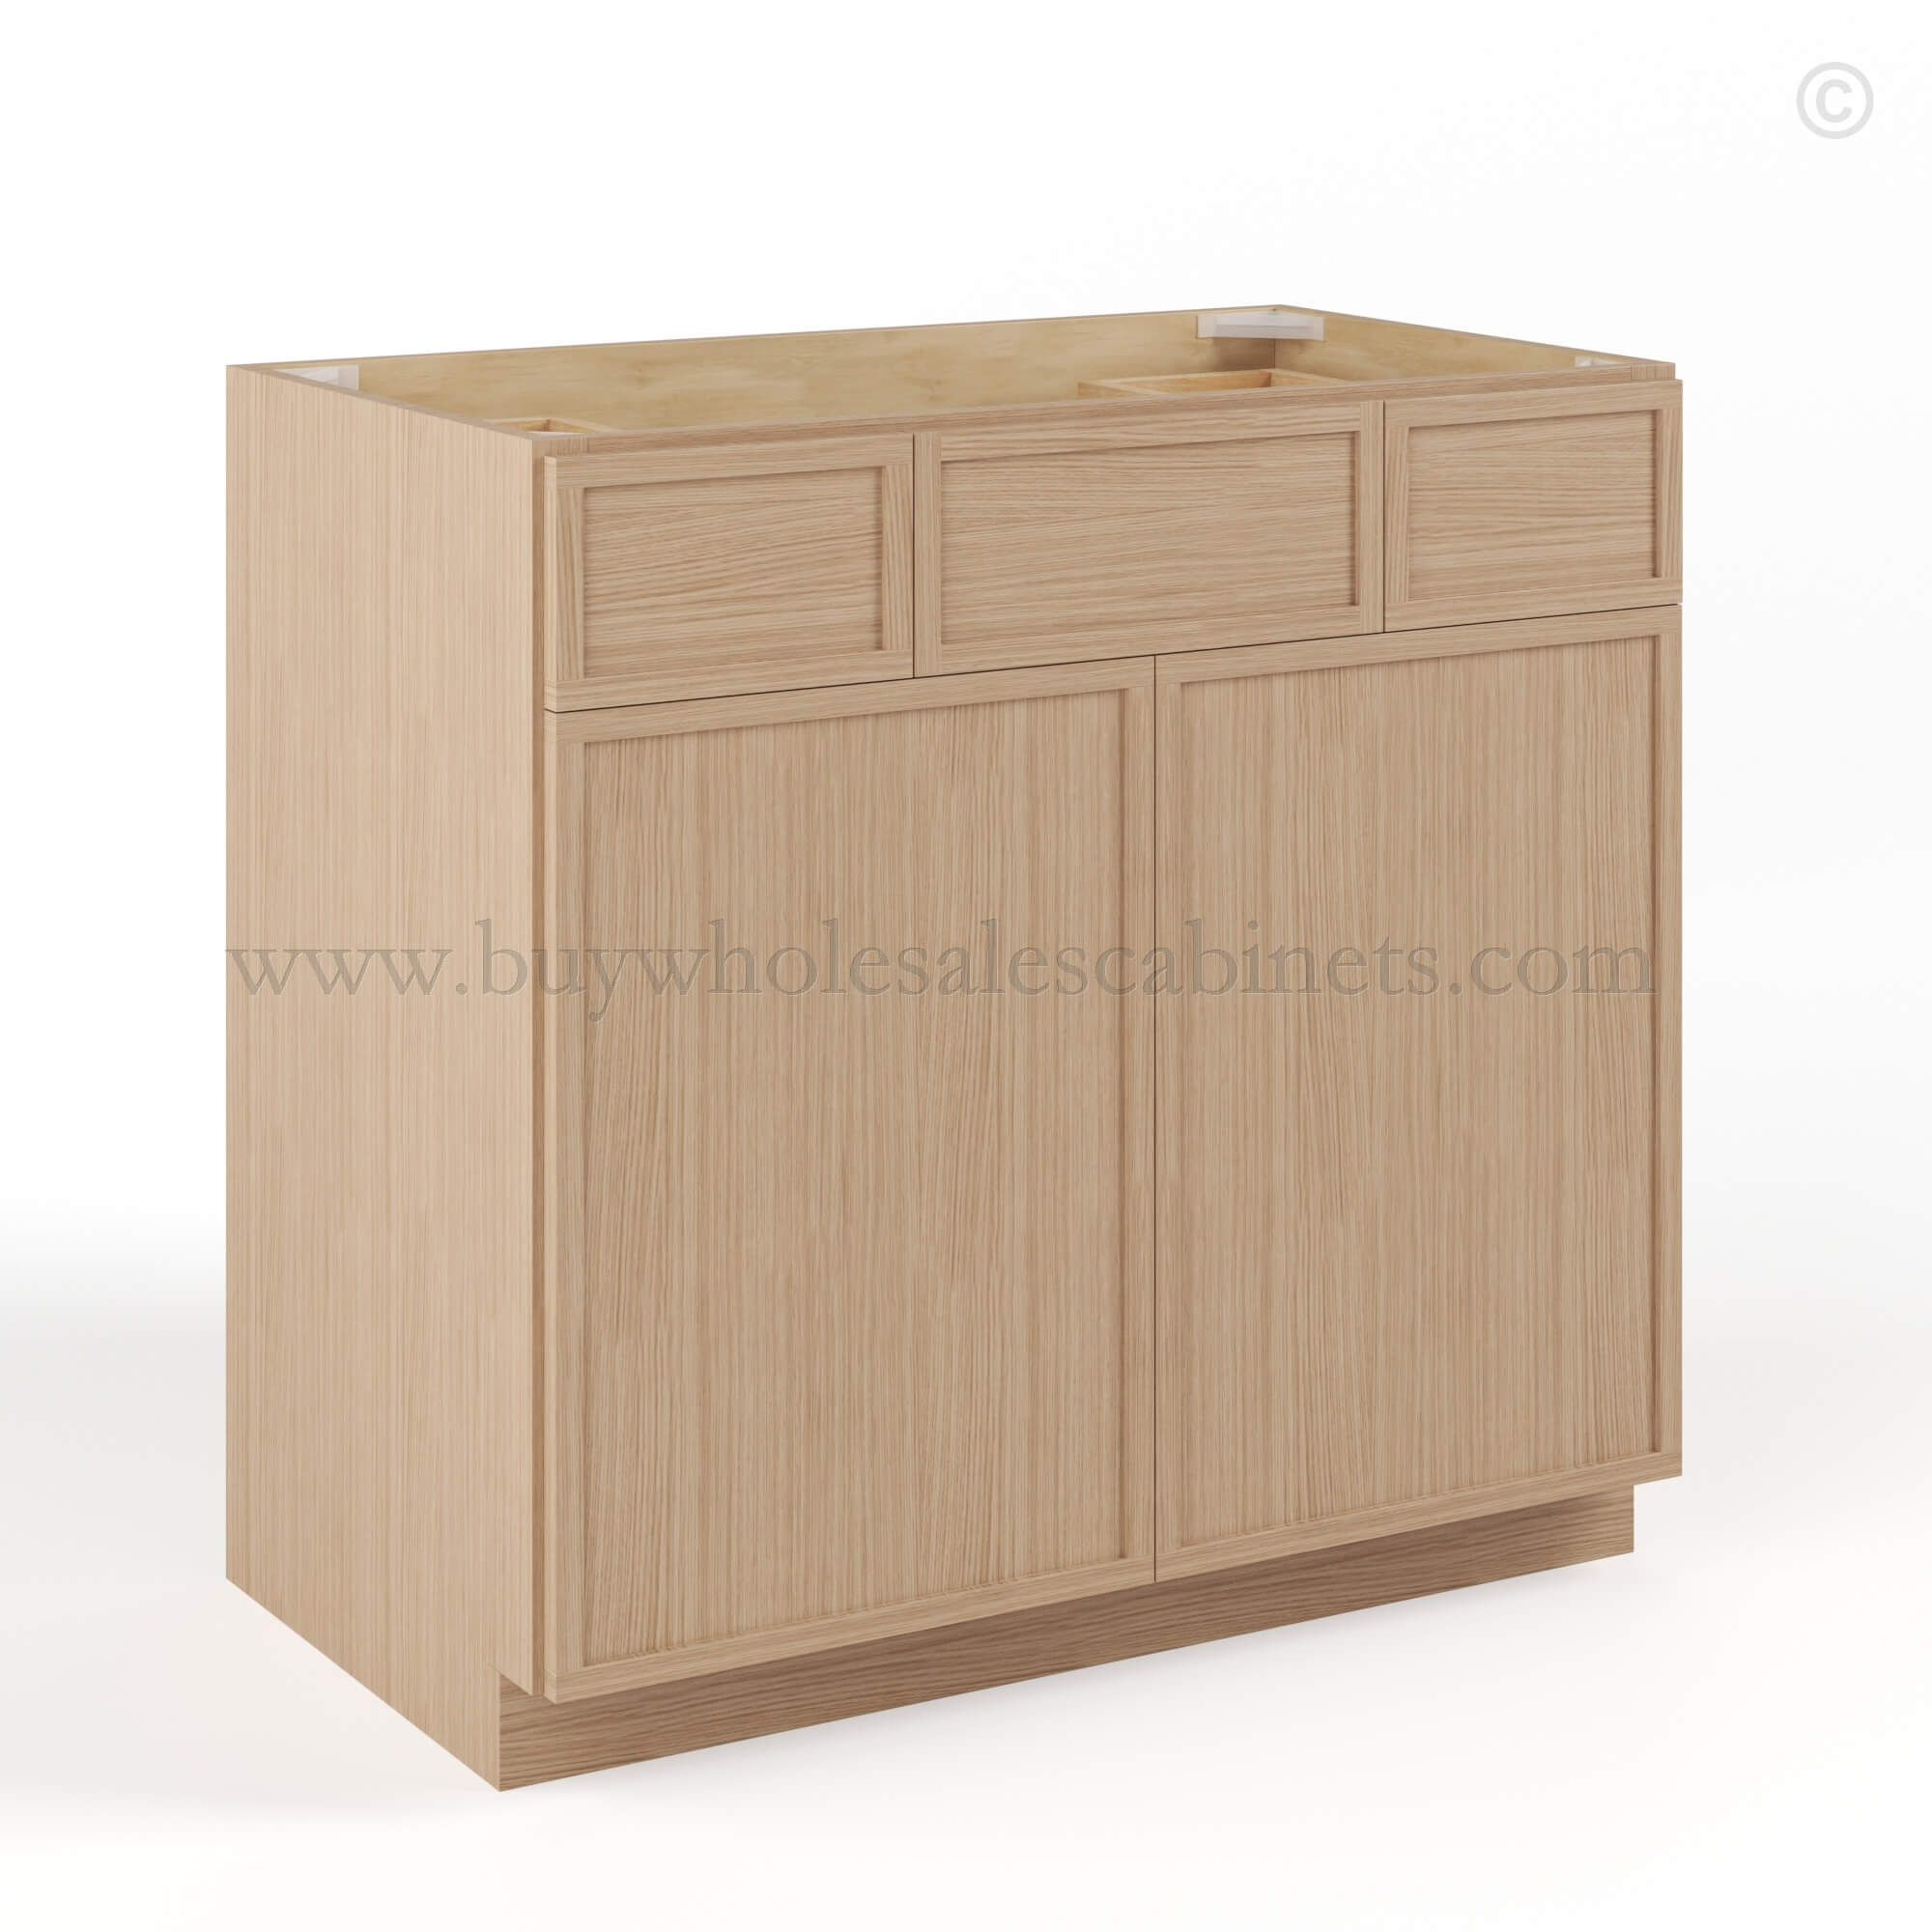 Slim Oak Shaker Vanity Sink Drawer Base Cabinet, rta cabinets, wholesael cabinets